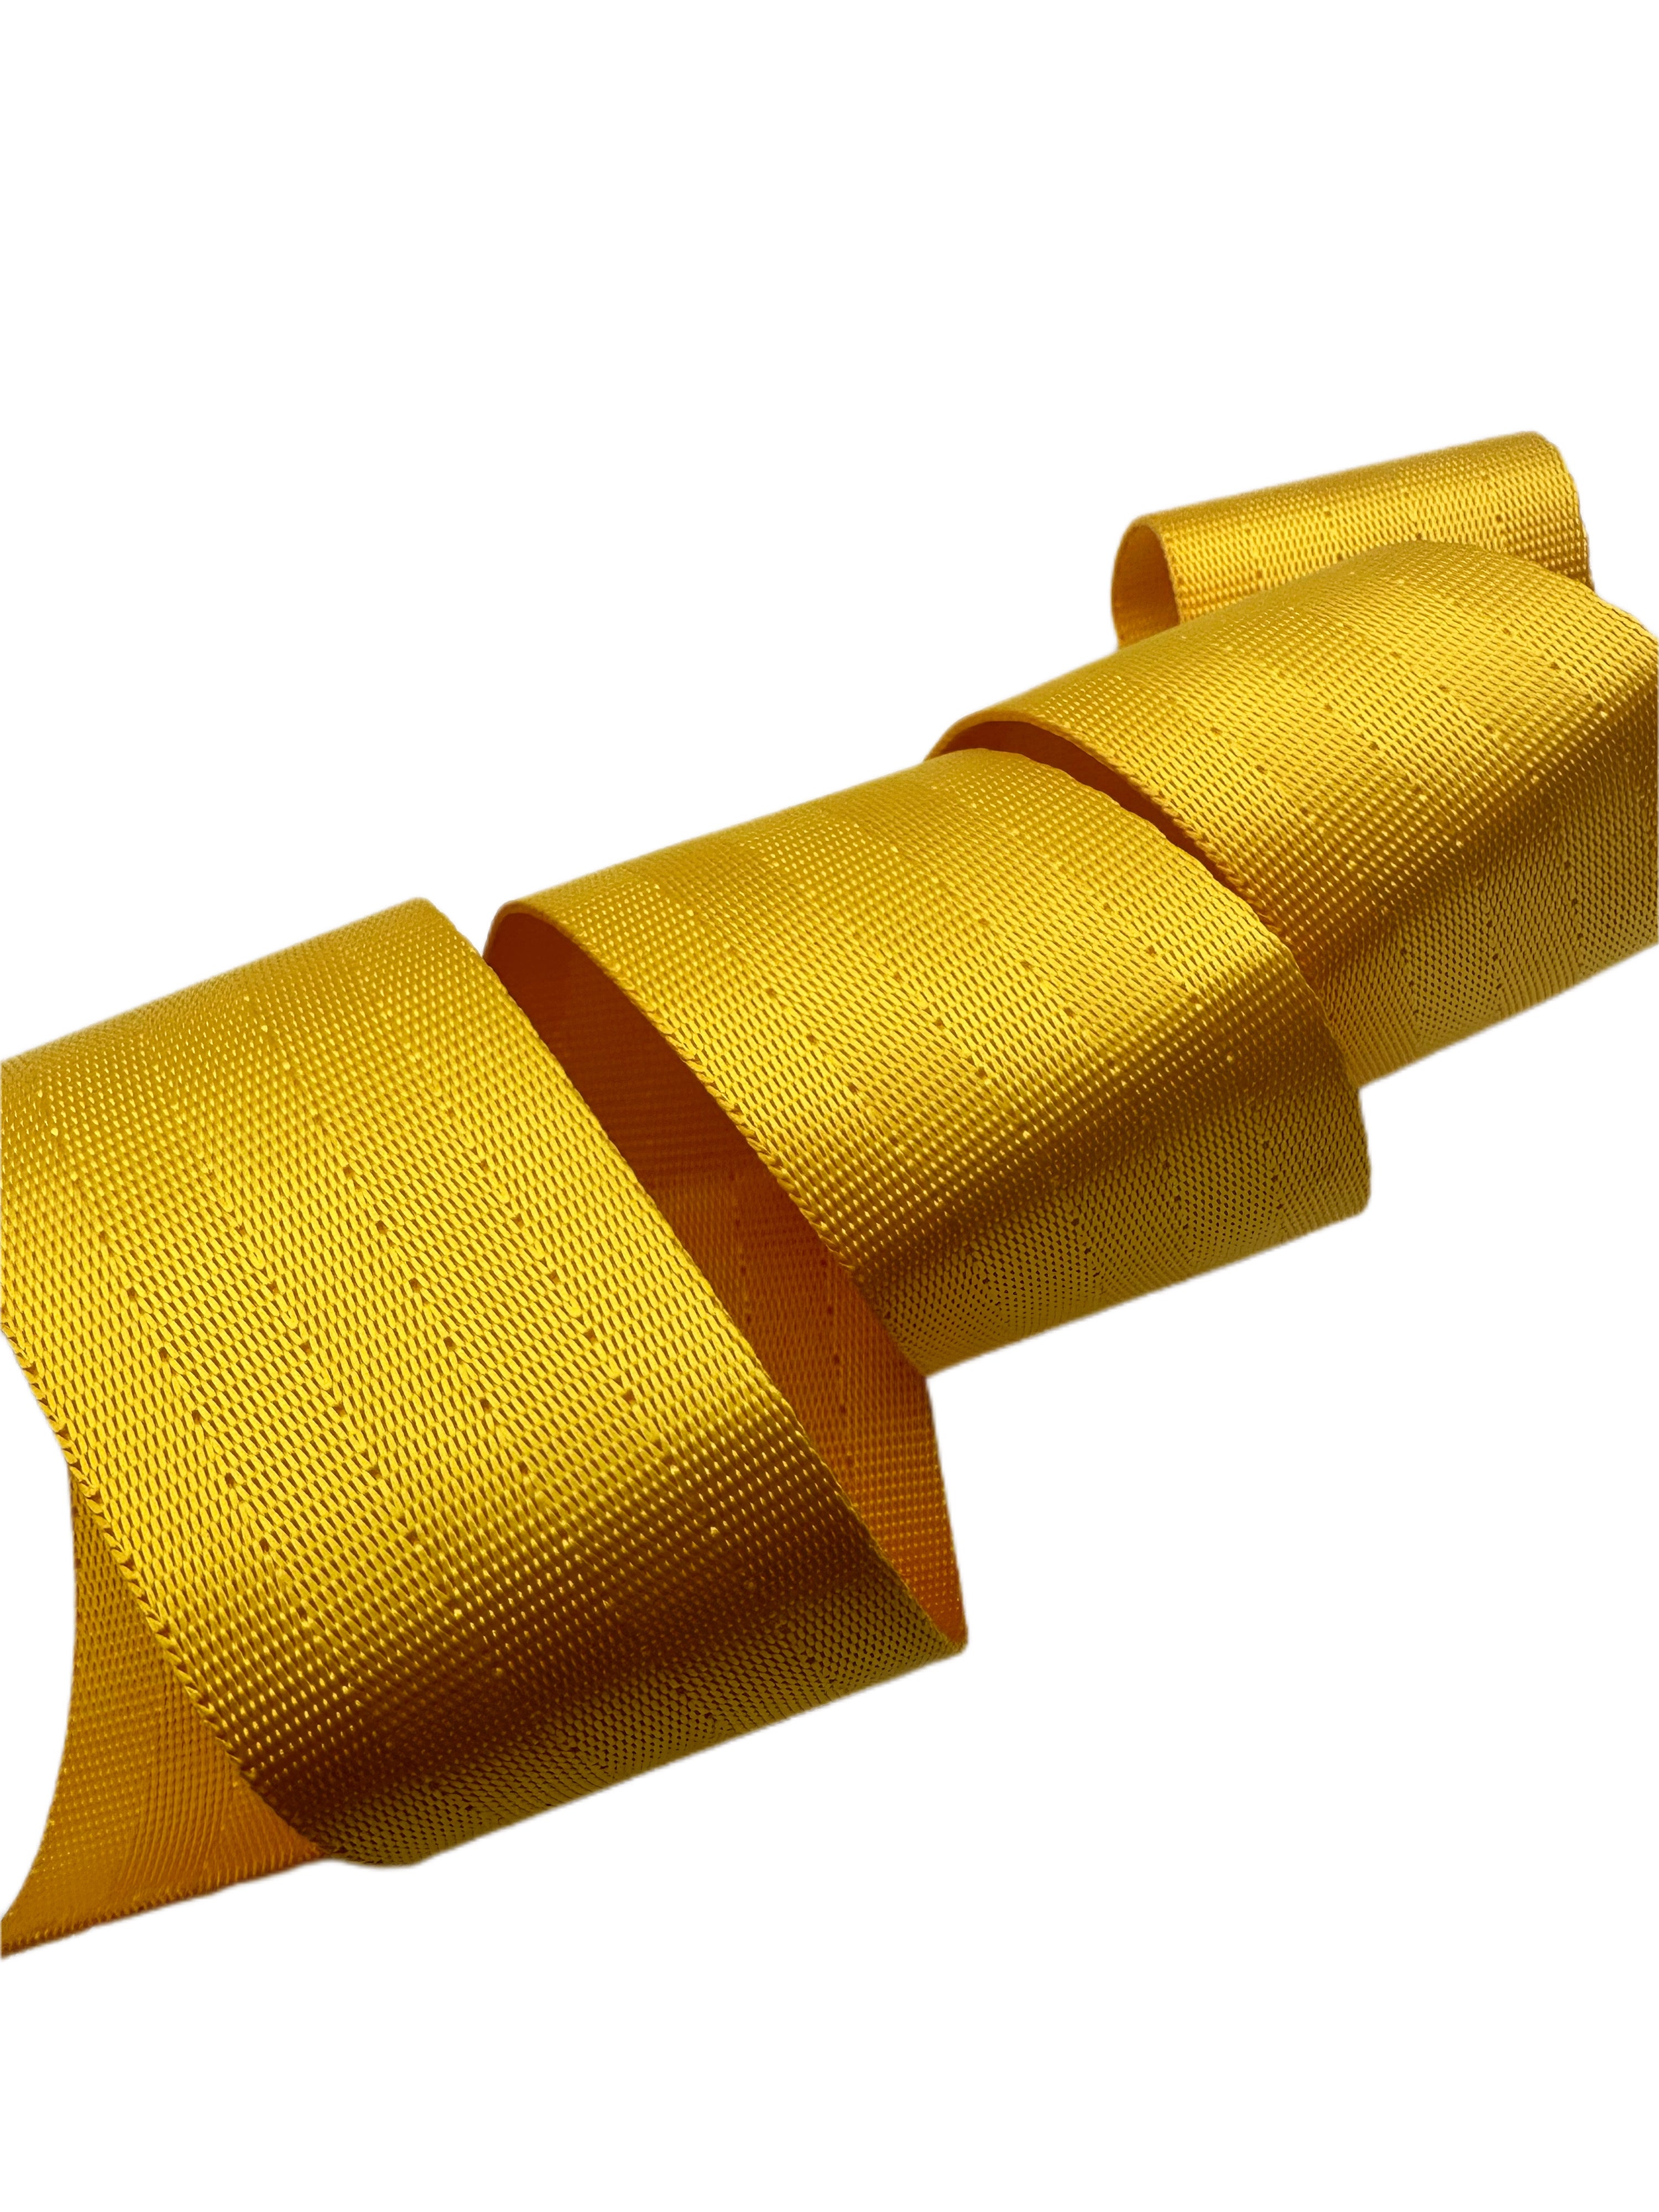 Yellow Gold 1.5” Seatbelt Webbing